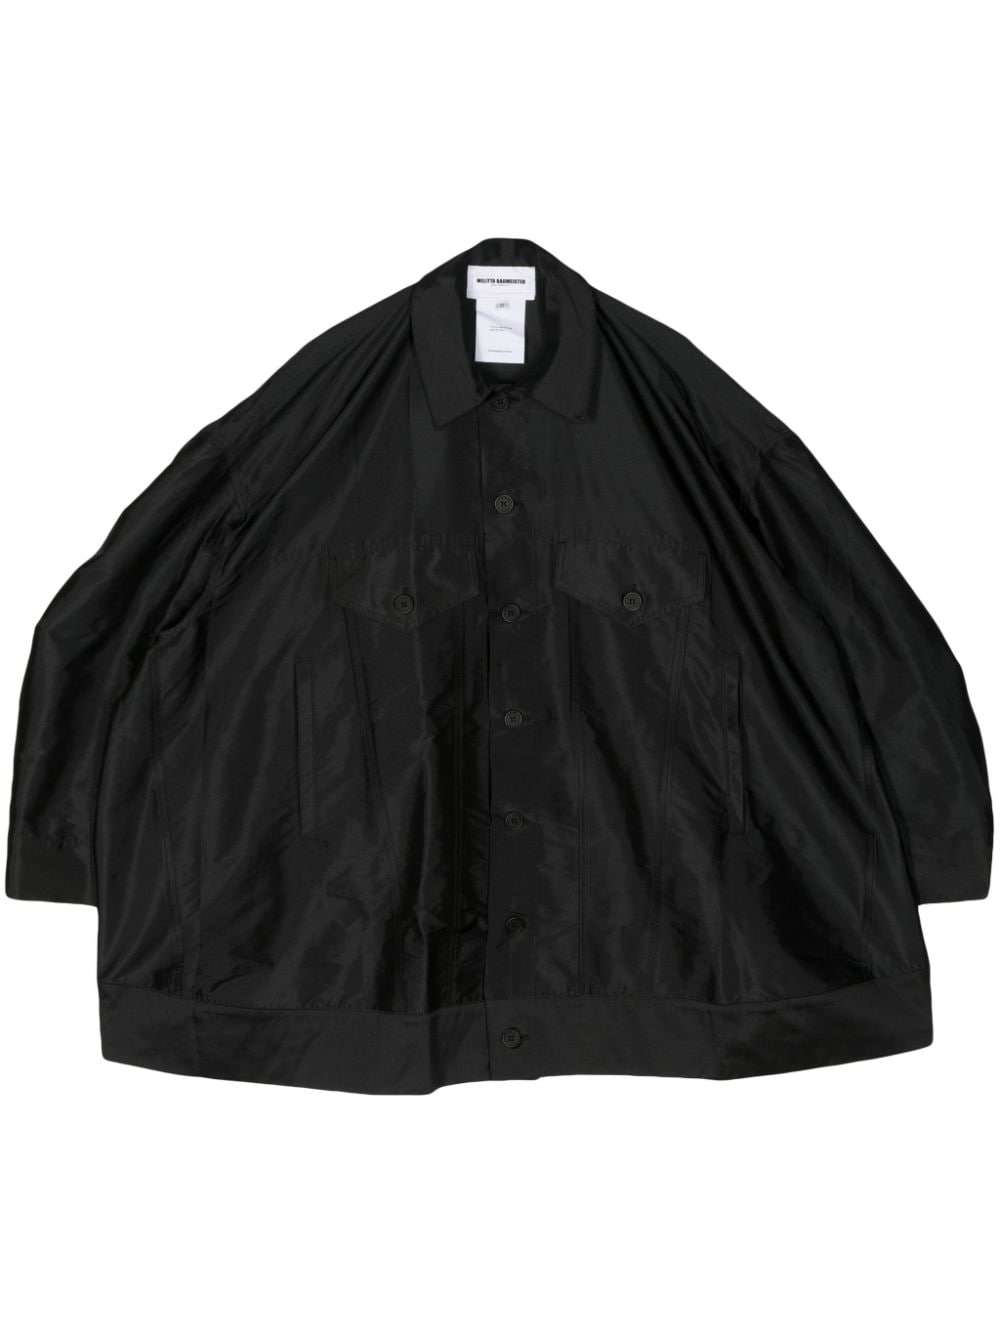 Melitta Baumeister Button-up Shirt Jacket In Black